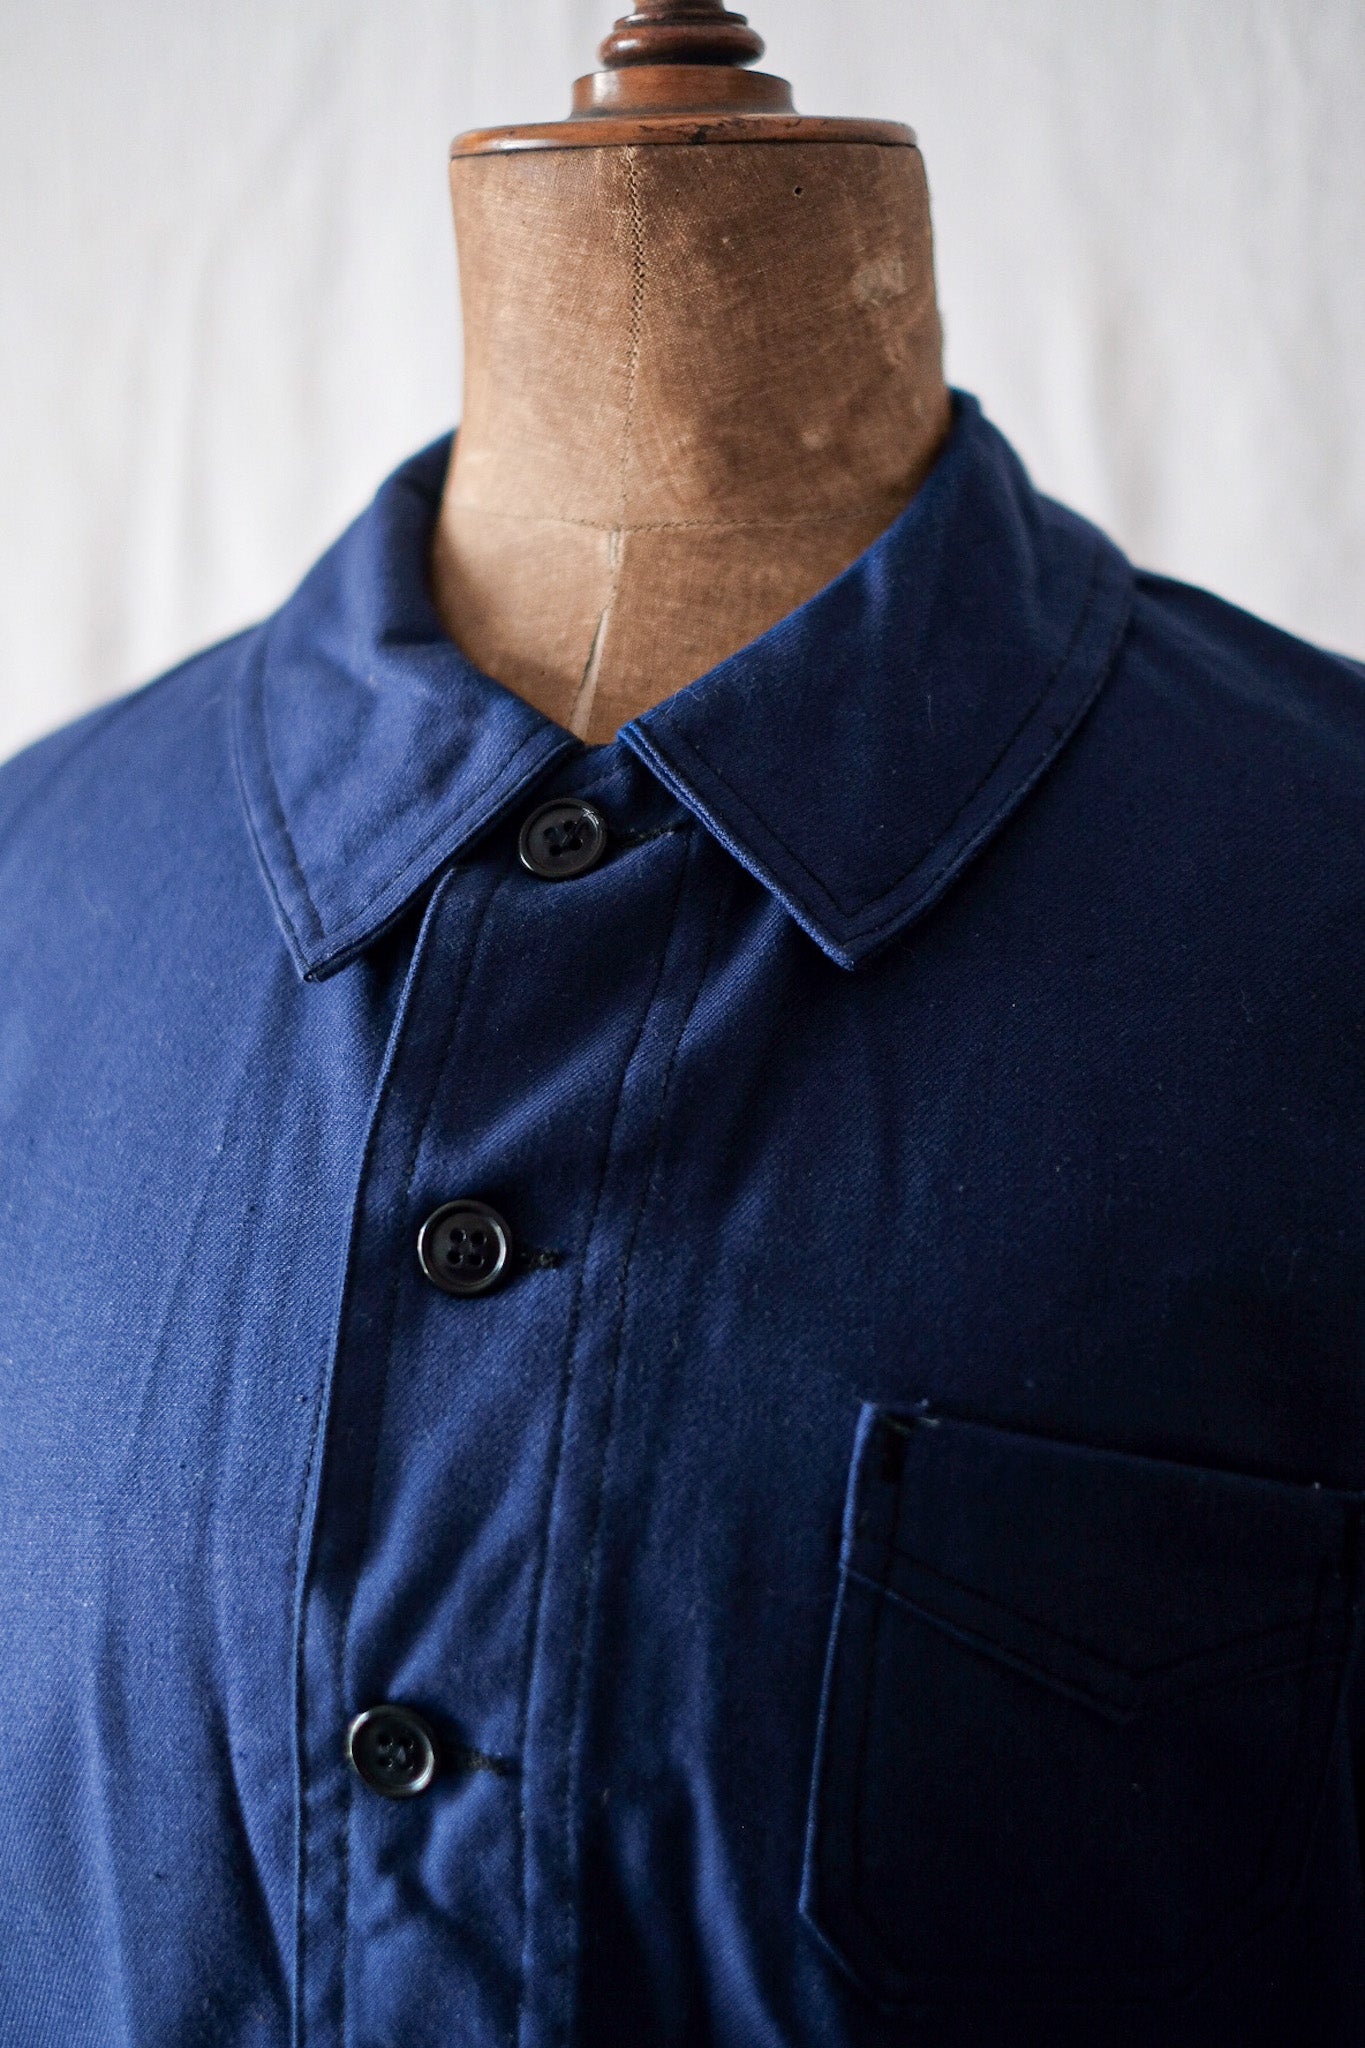 [~ 40's] French Vintage Blue Cotton Twil Work Jacket